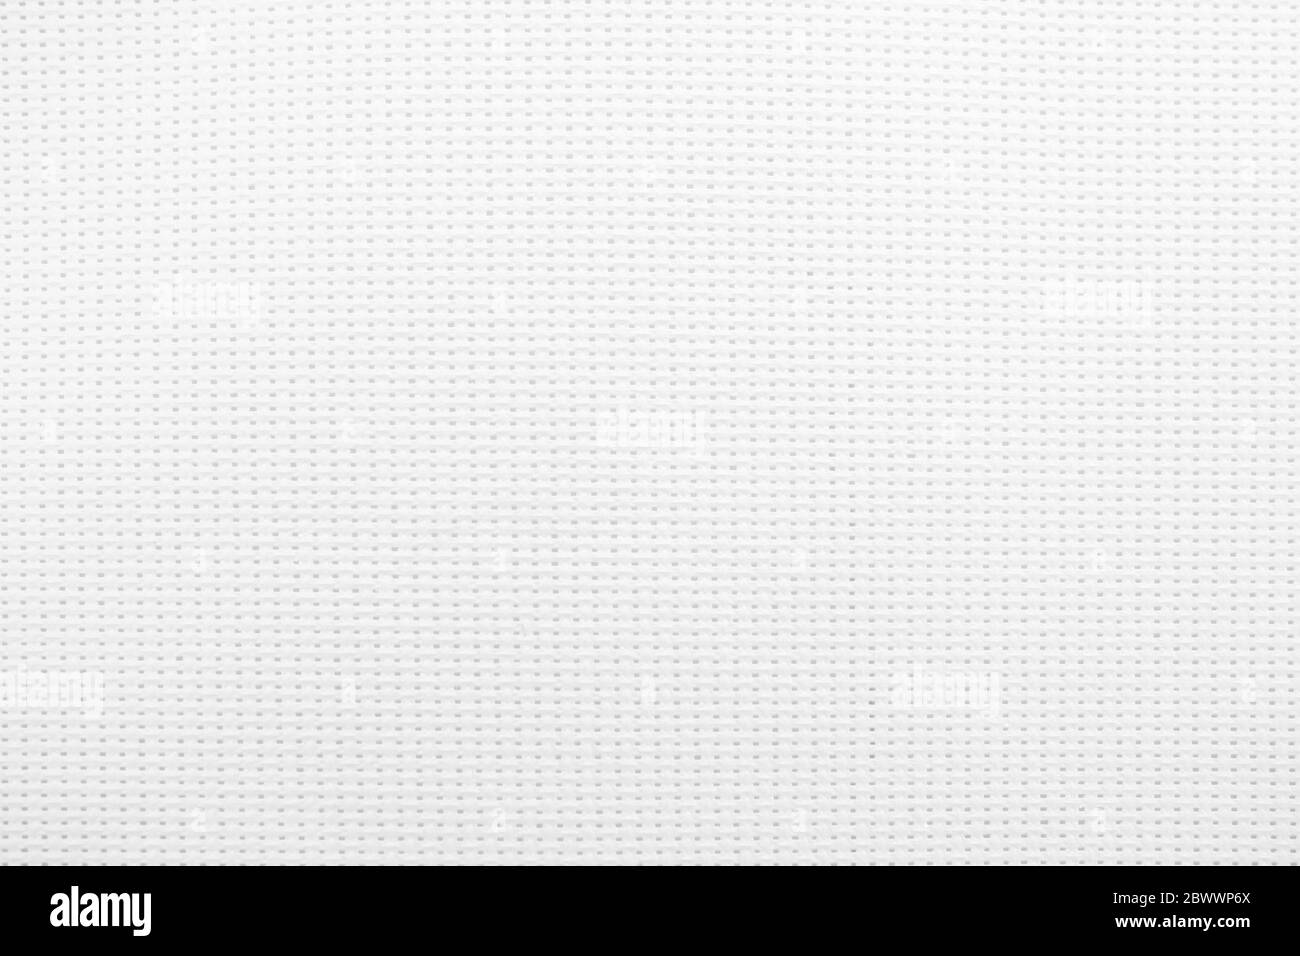 White Rubber Sheet Texture Background. Stock Photo